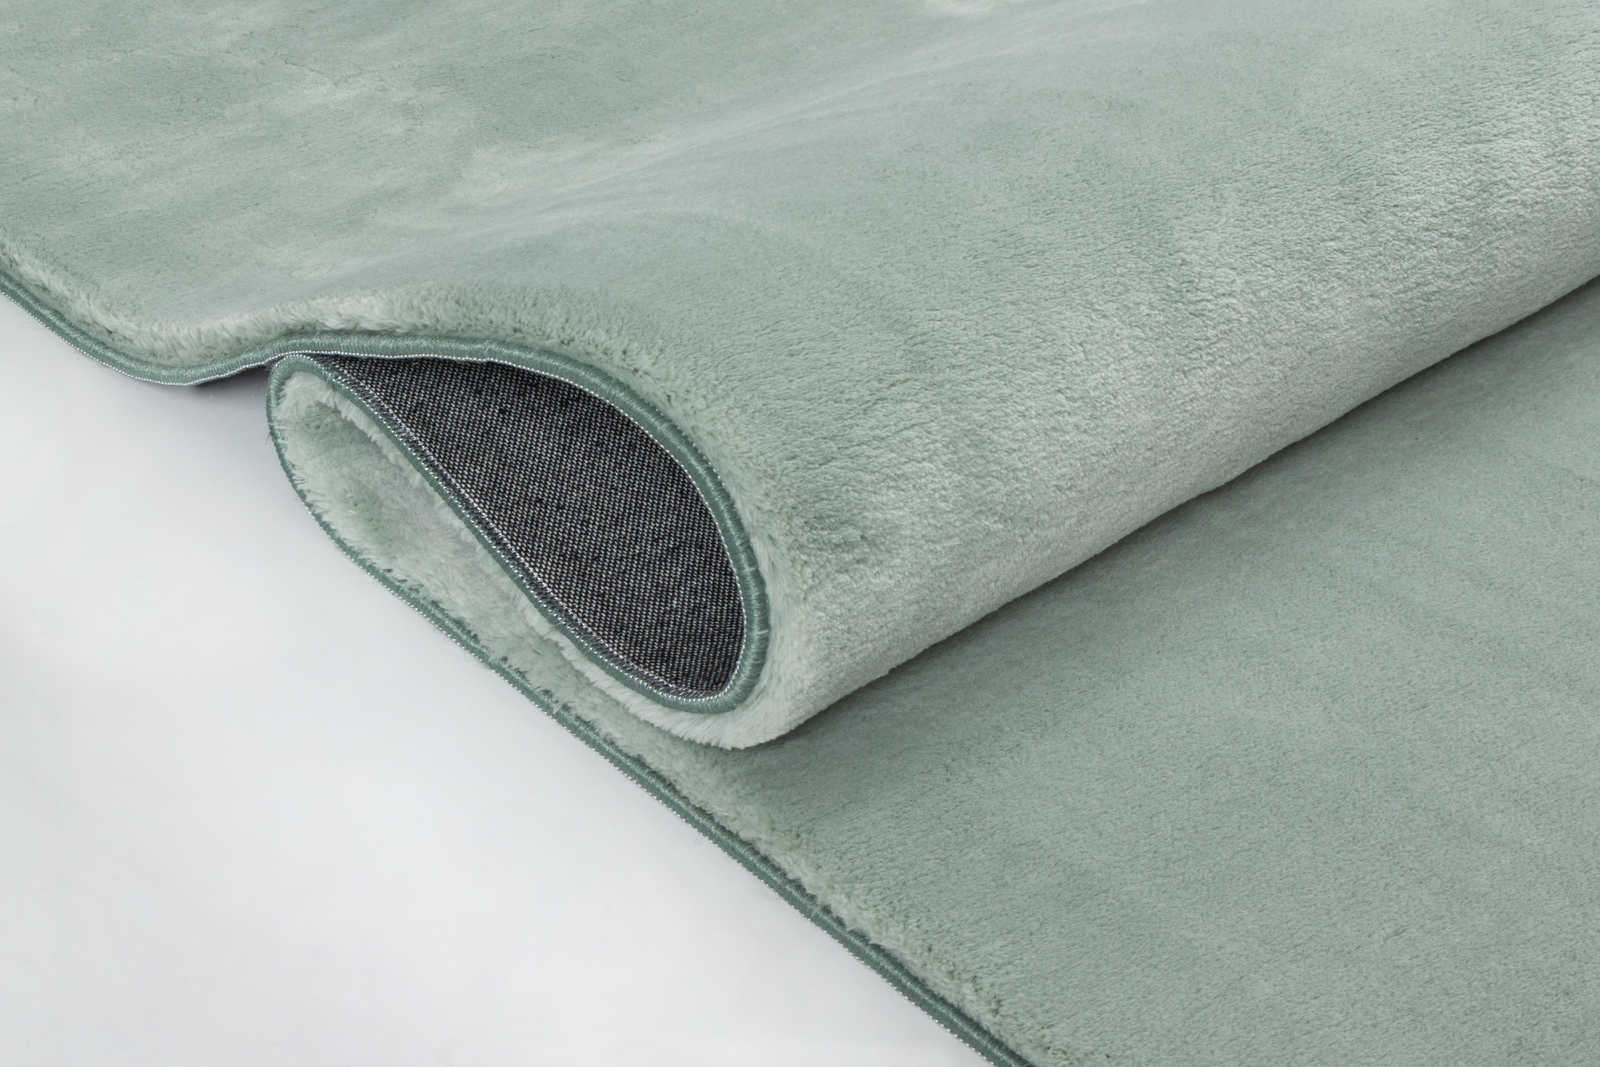             Soft high pile carpet in soft green - 110 x 60 cm
        